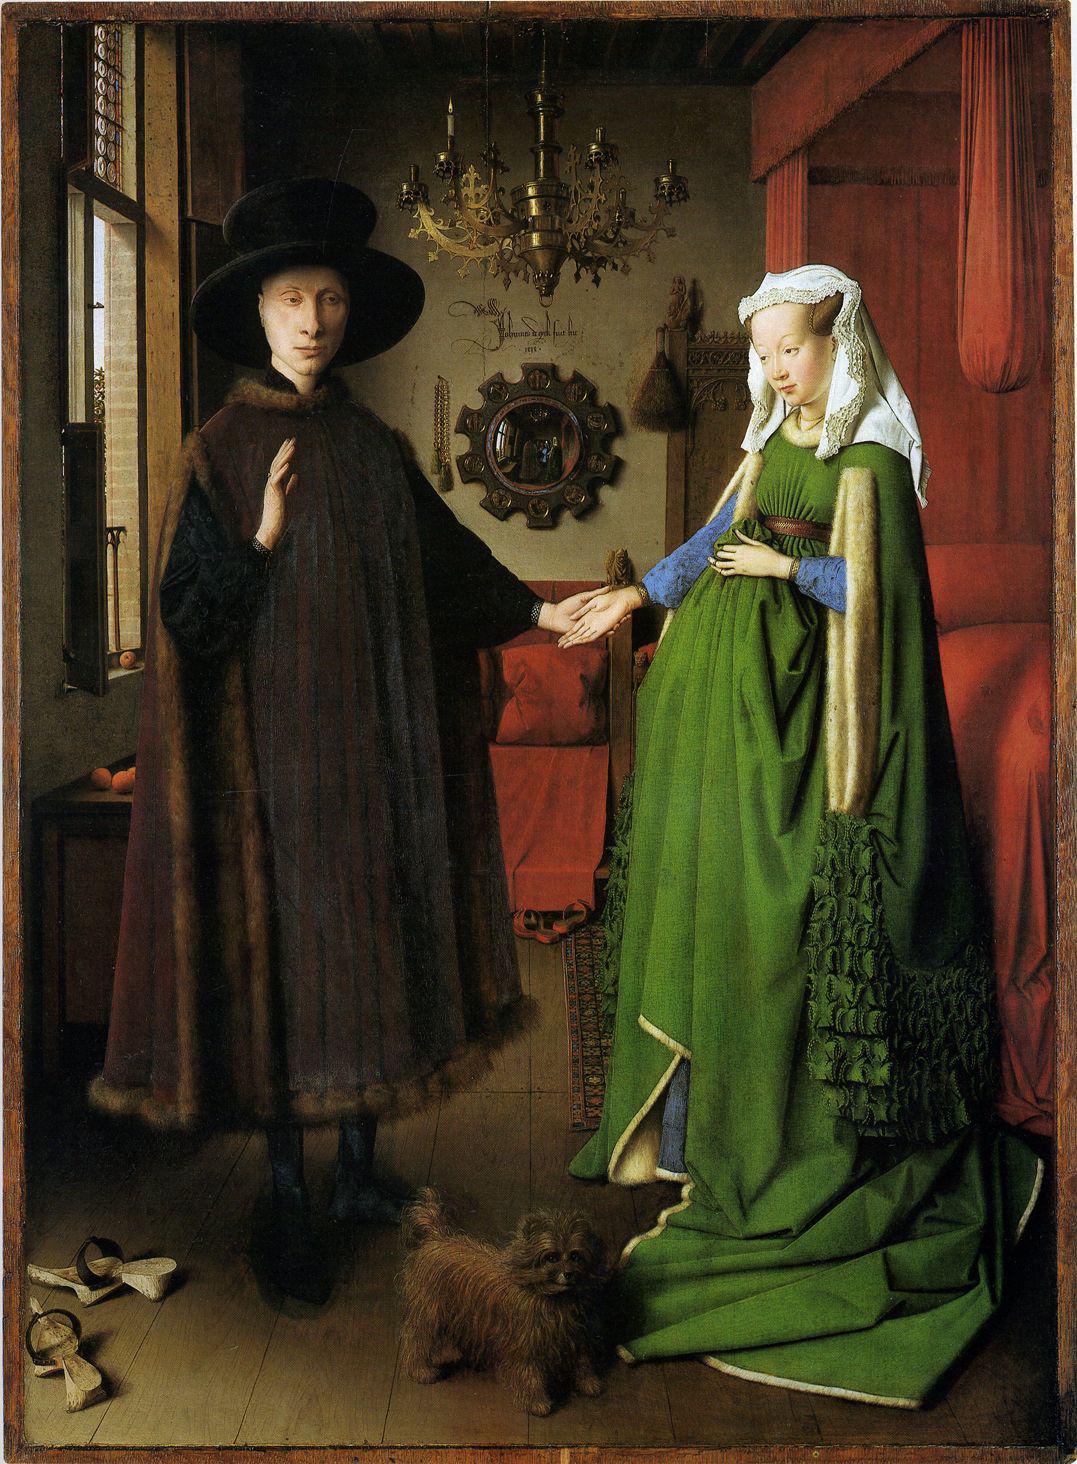 The Arnolfini Wedding Portrait, Jan Van Eyck